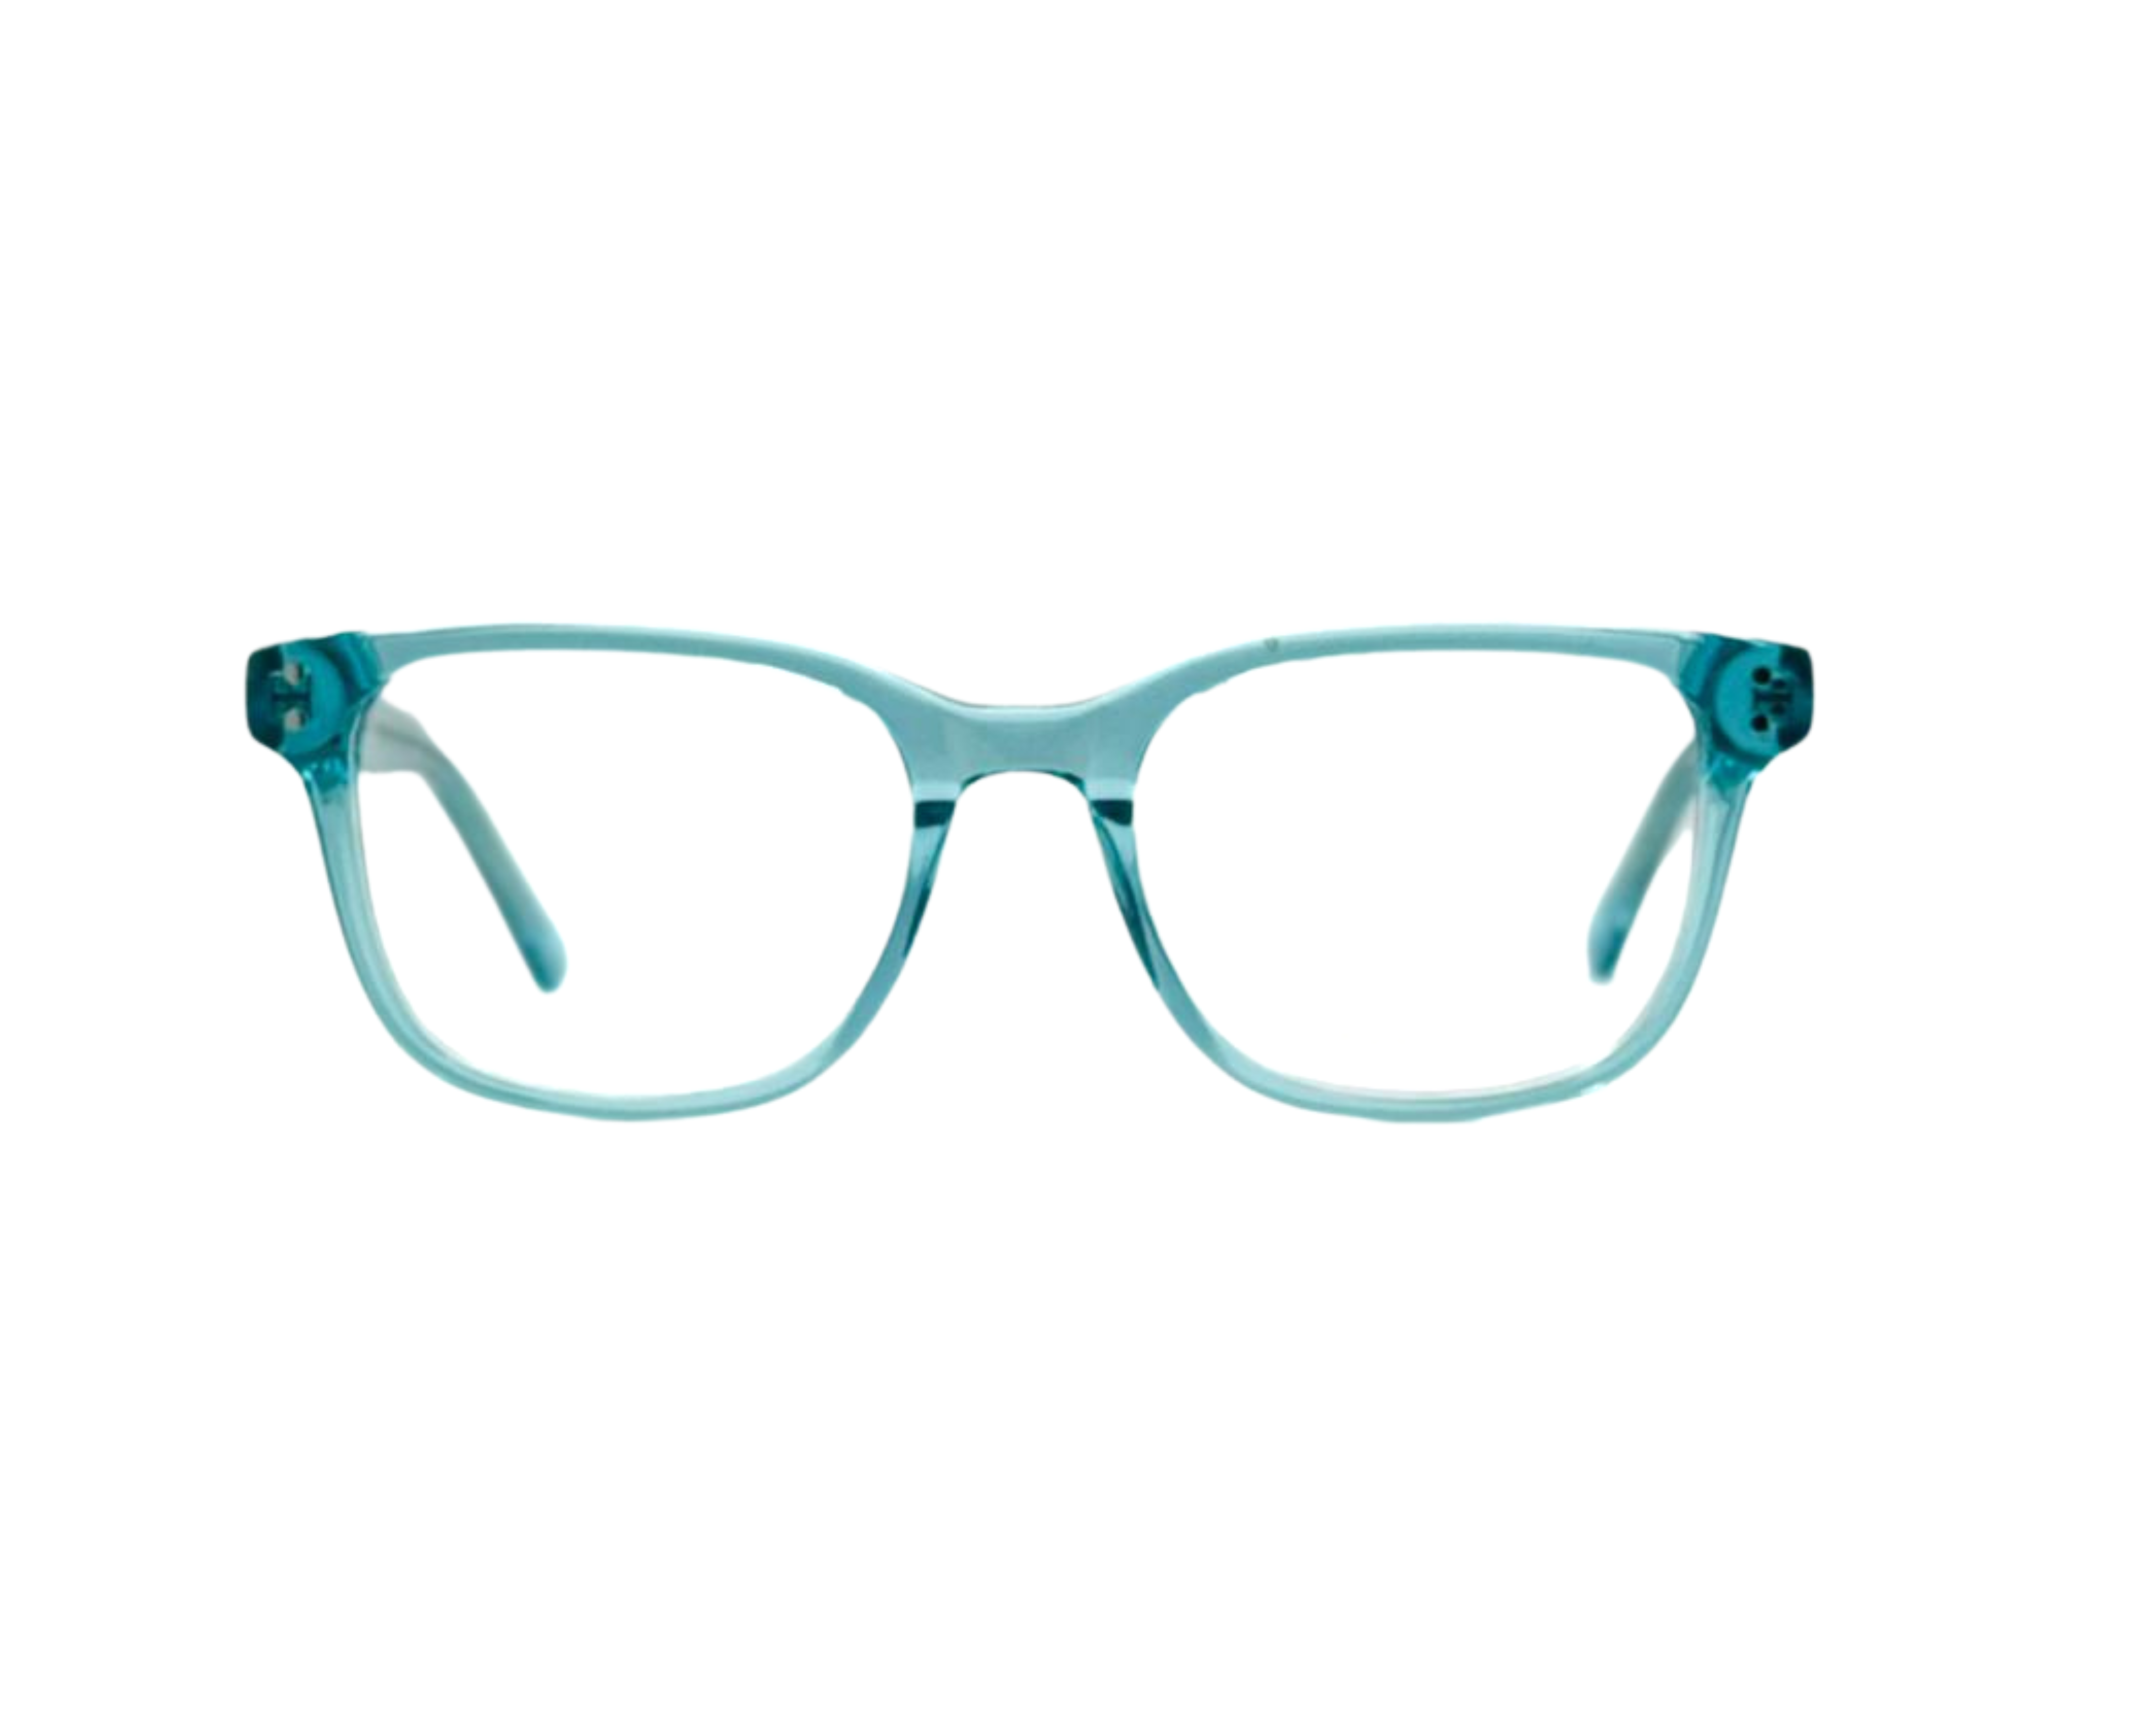 NS Luxury - J08 - Teal - Eyeglasses